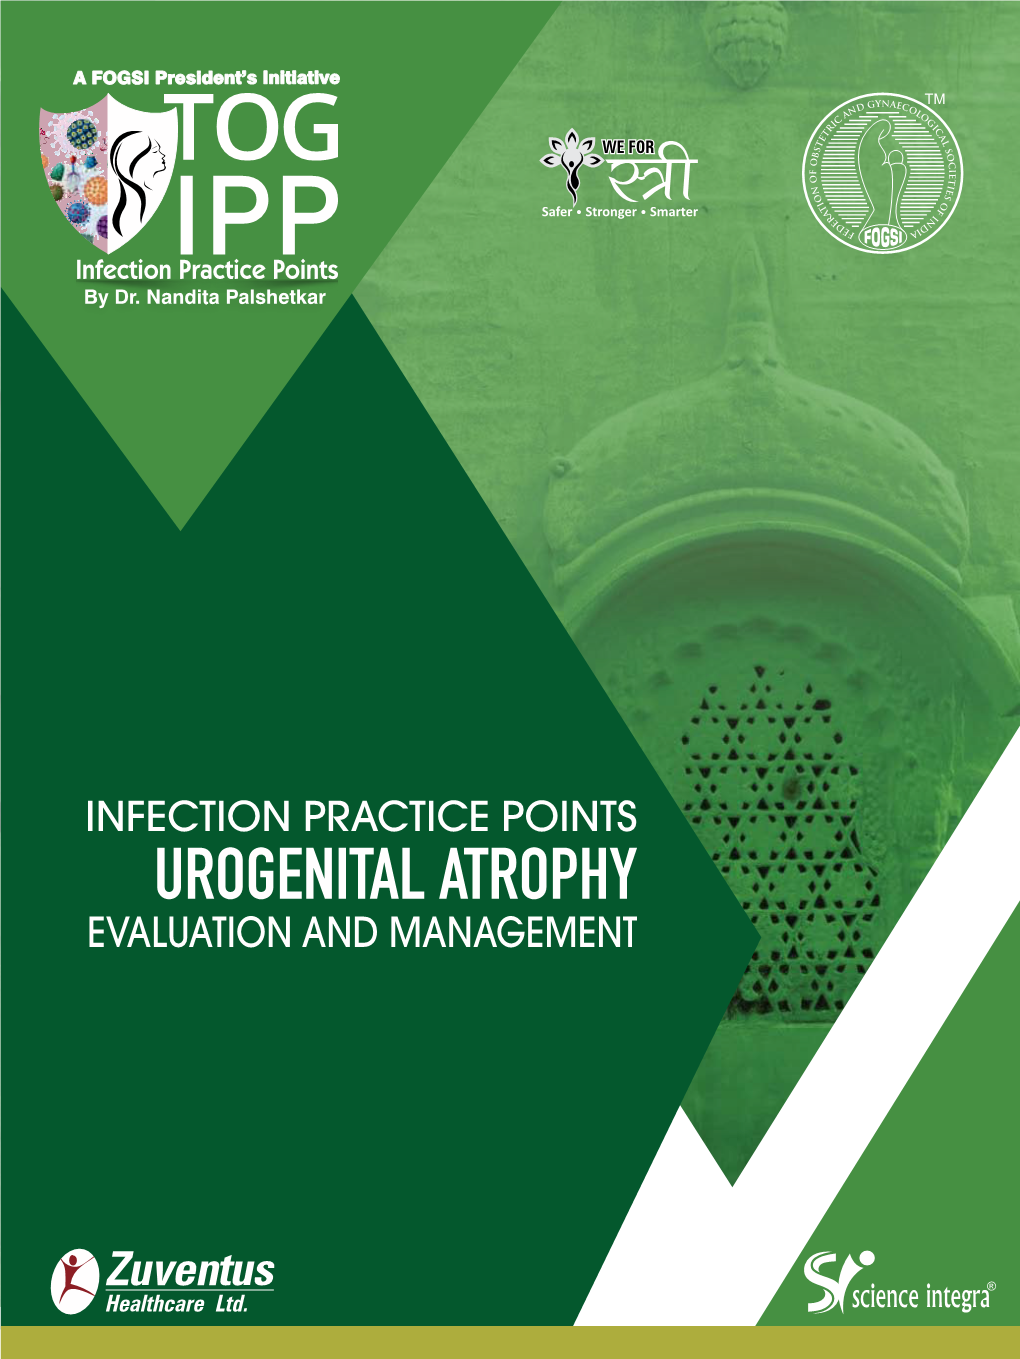 Urogenital Atrophy Evaluation and Management